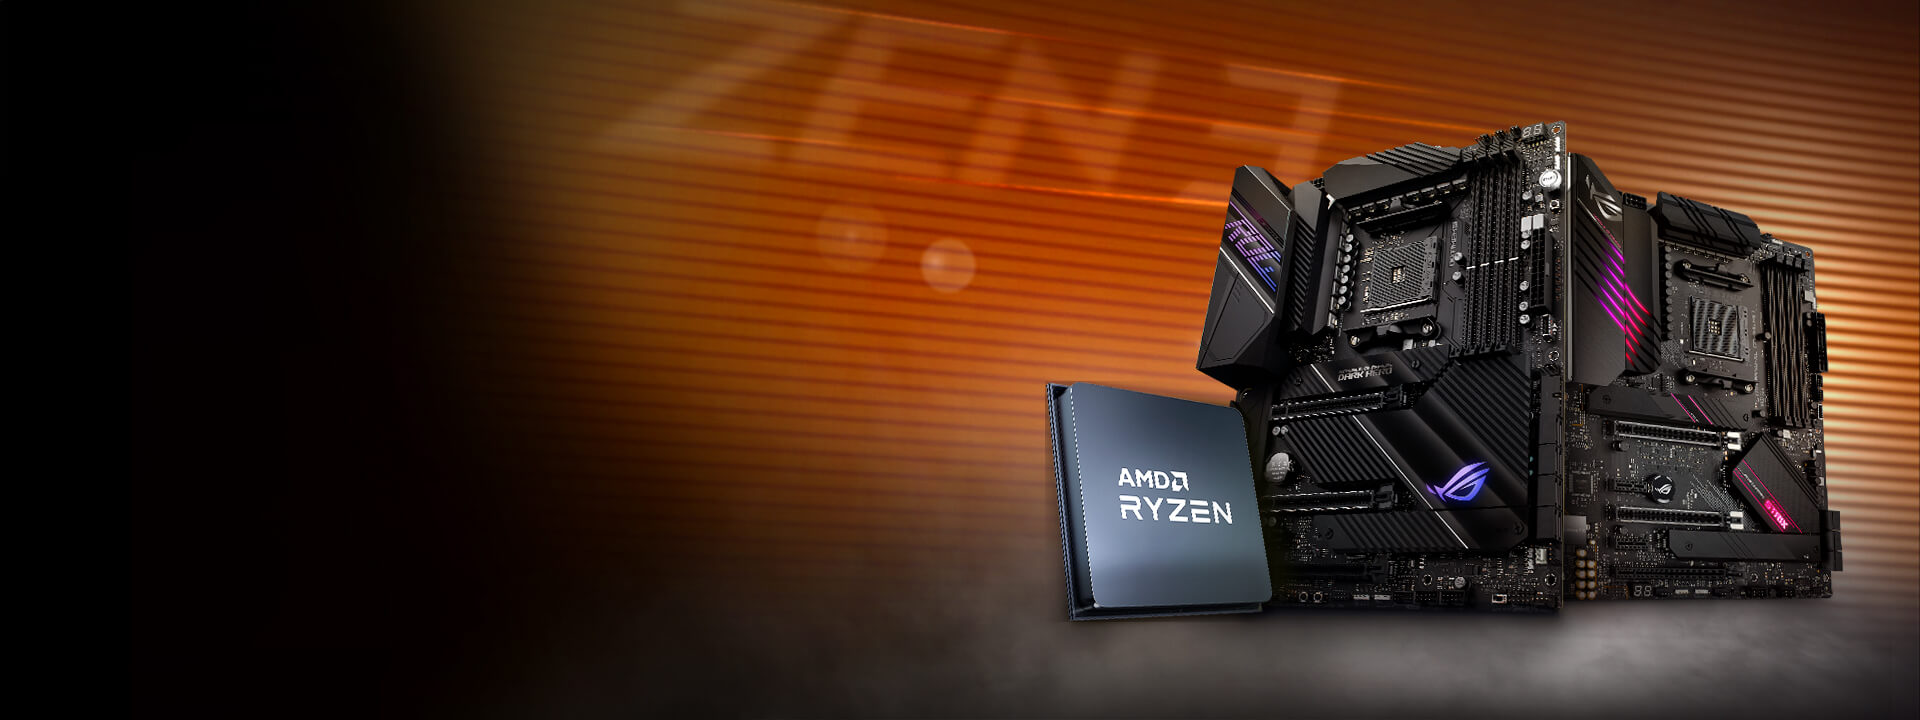 ASUS AMD B450 B550 X570 series Motherboard